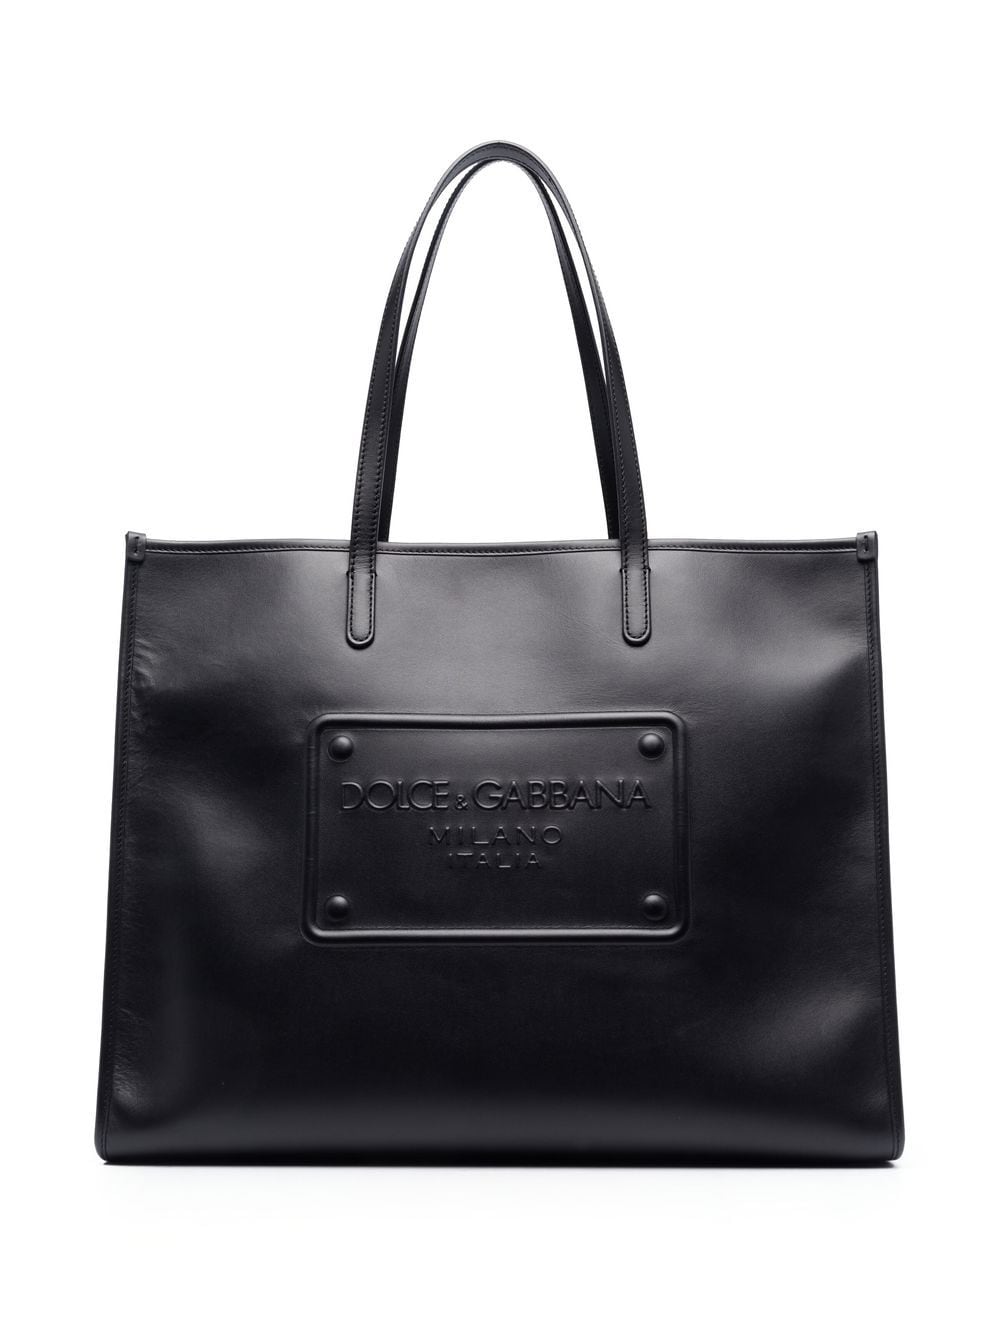 Image 1 of Dolce & Gabbana logo embossed shopping tote bag